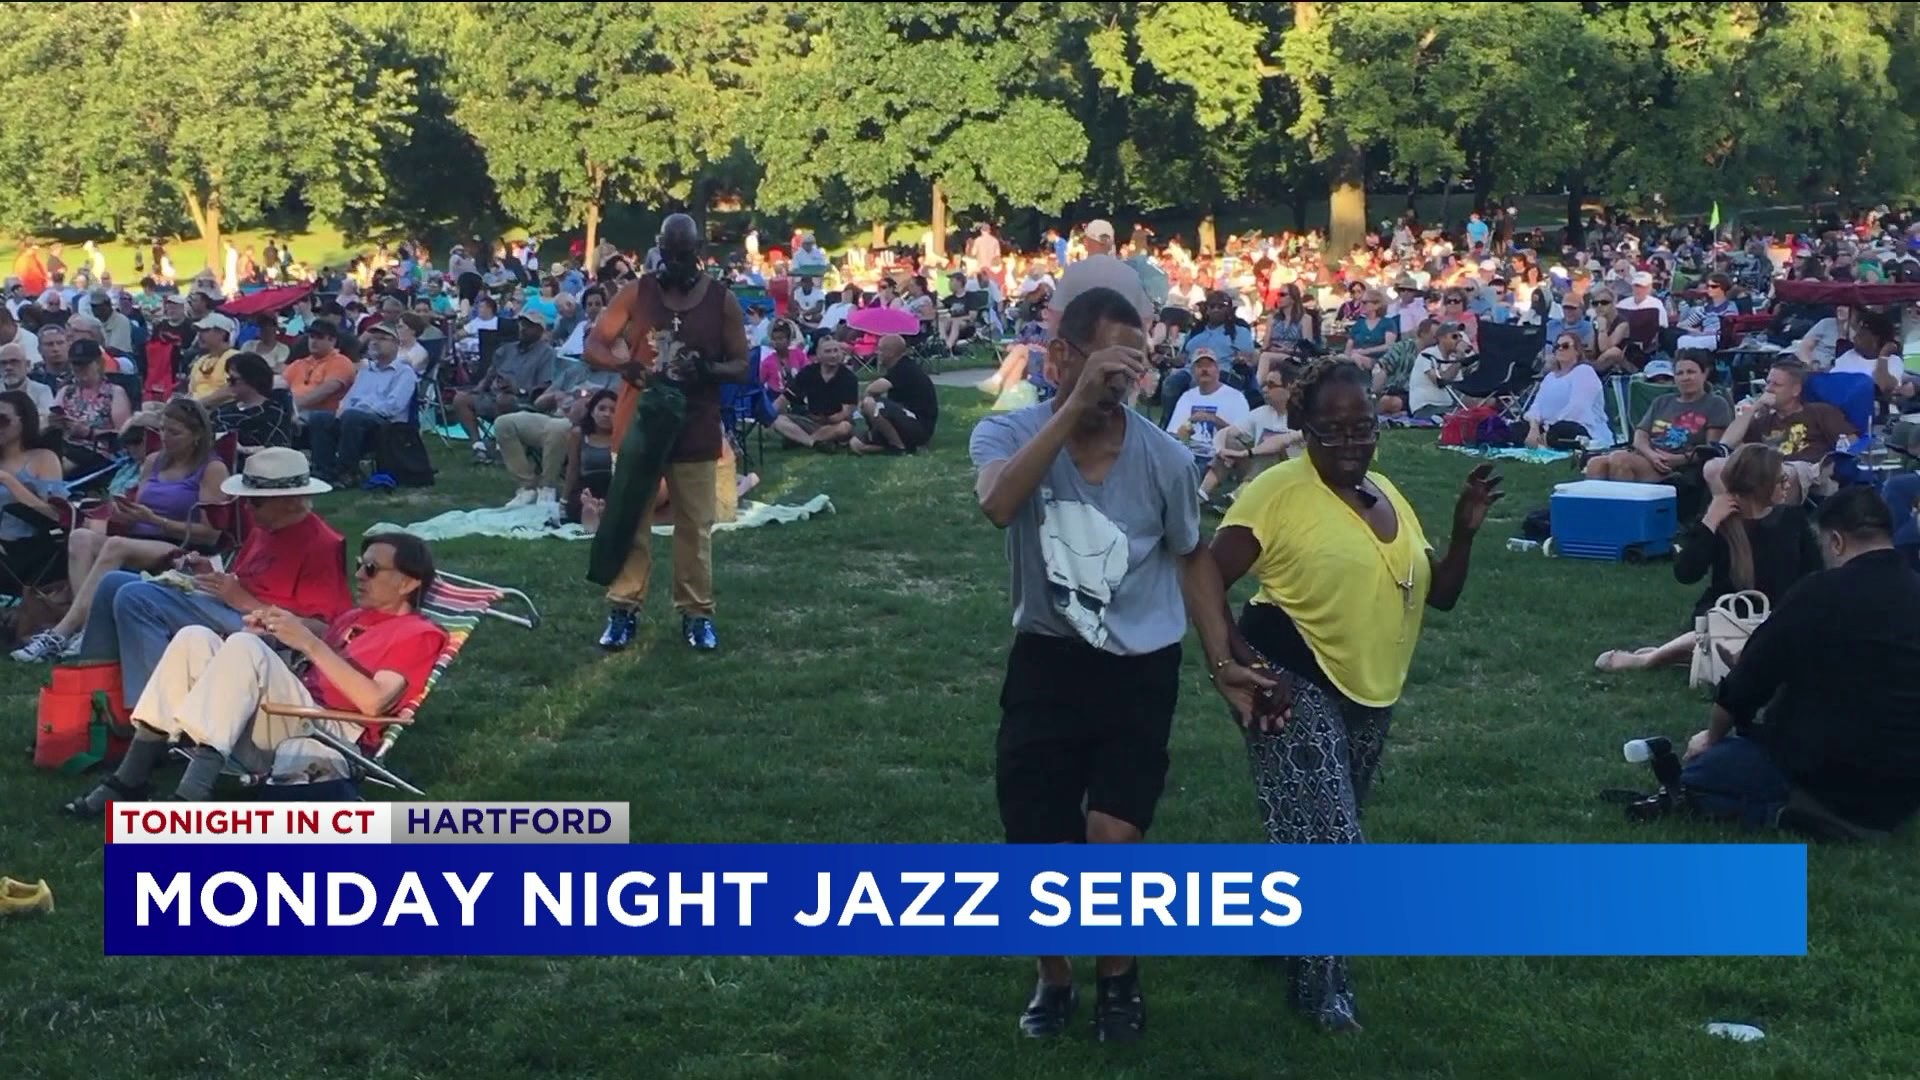 Free Jazz in Hartford’s Bushnell Park on Mondays